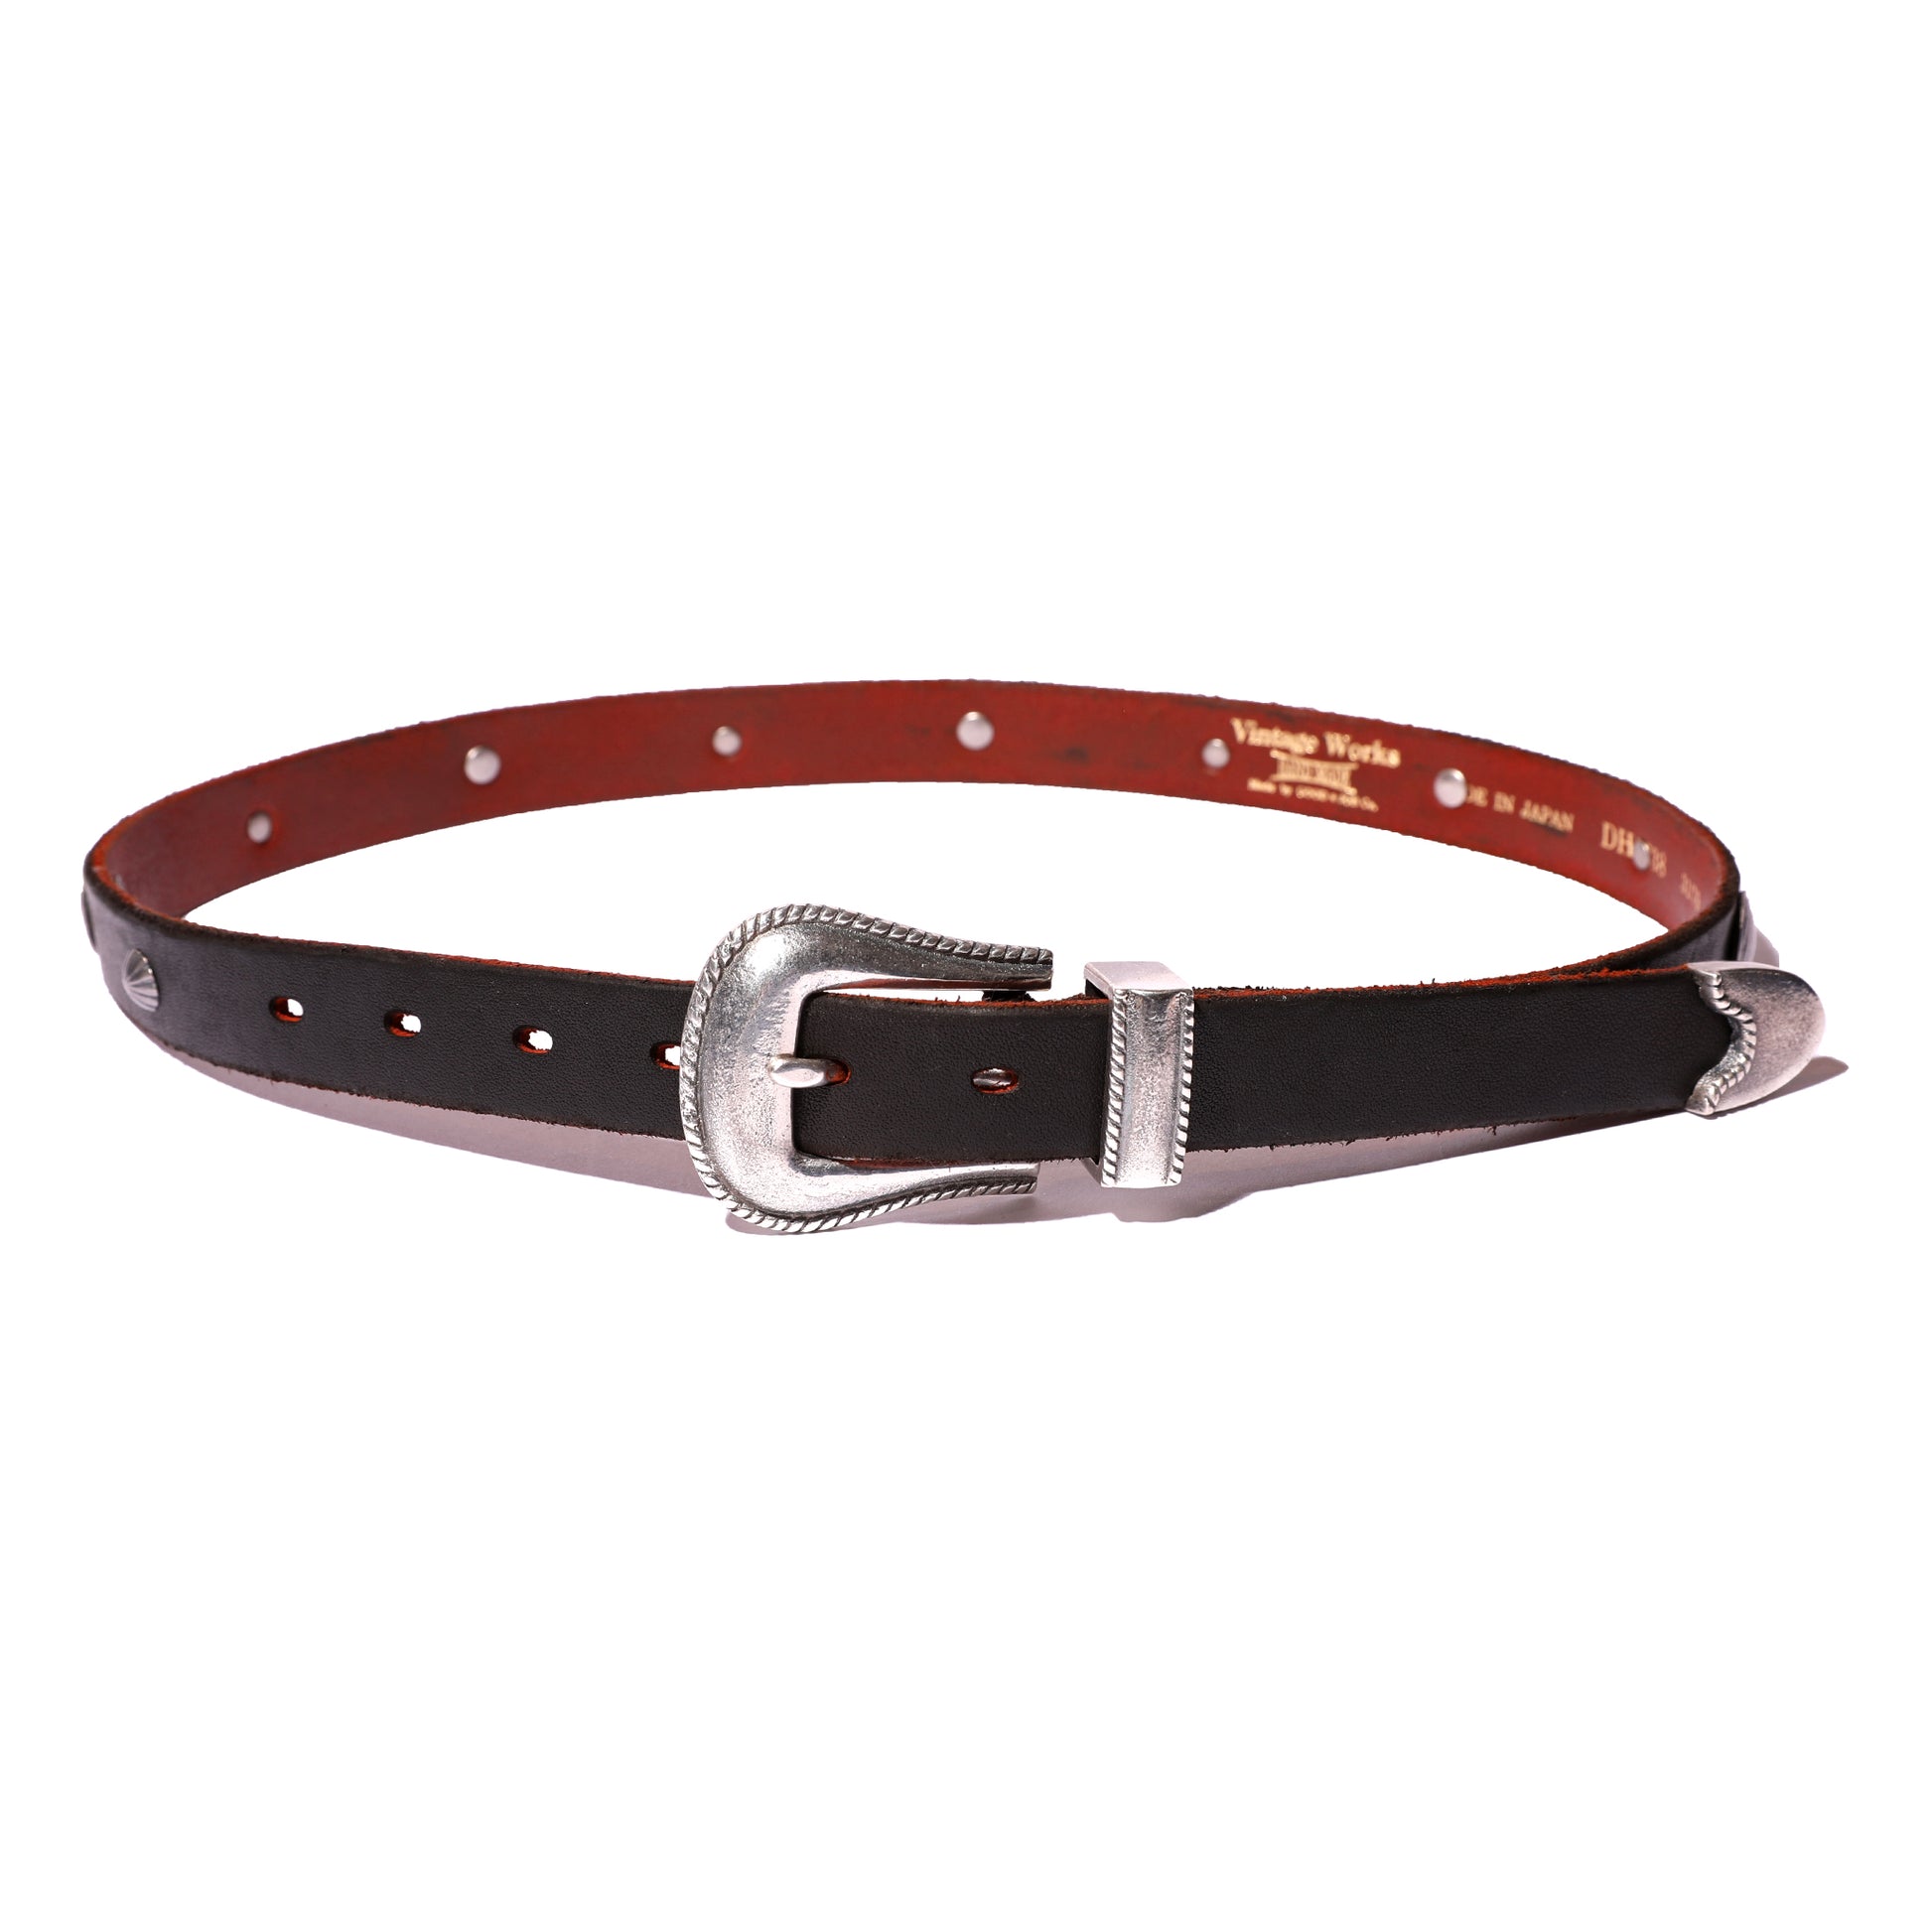 Vintage Works Leather belt DH5738 茶芯よろしくお願いいたします 